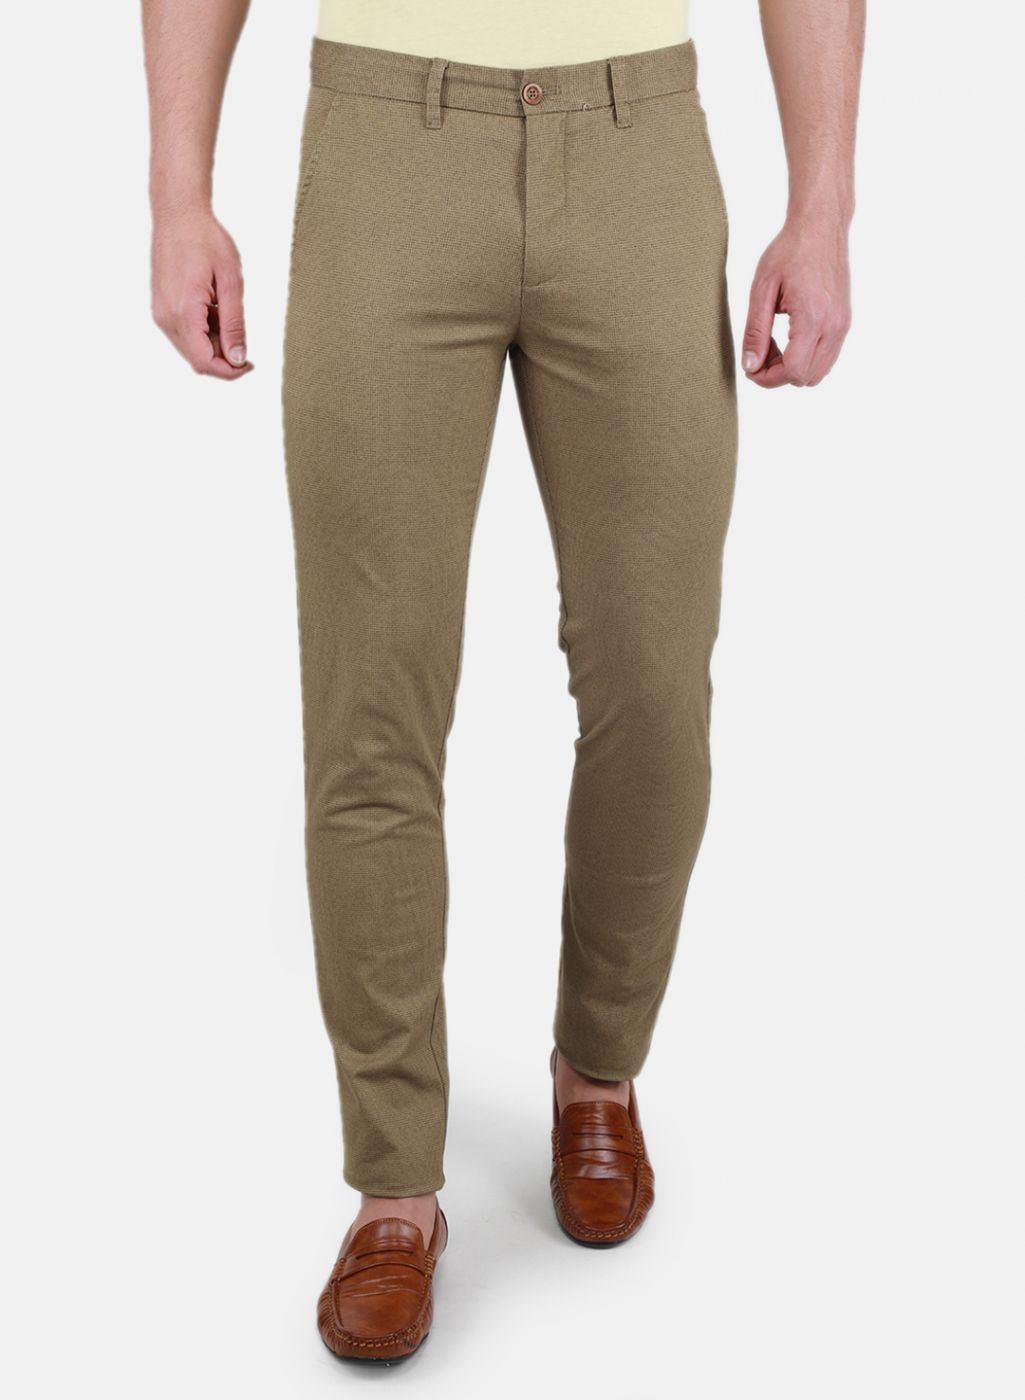 Trousers For Men - Buy Trouser Pants For Men Online - Monte Carlo